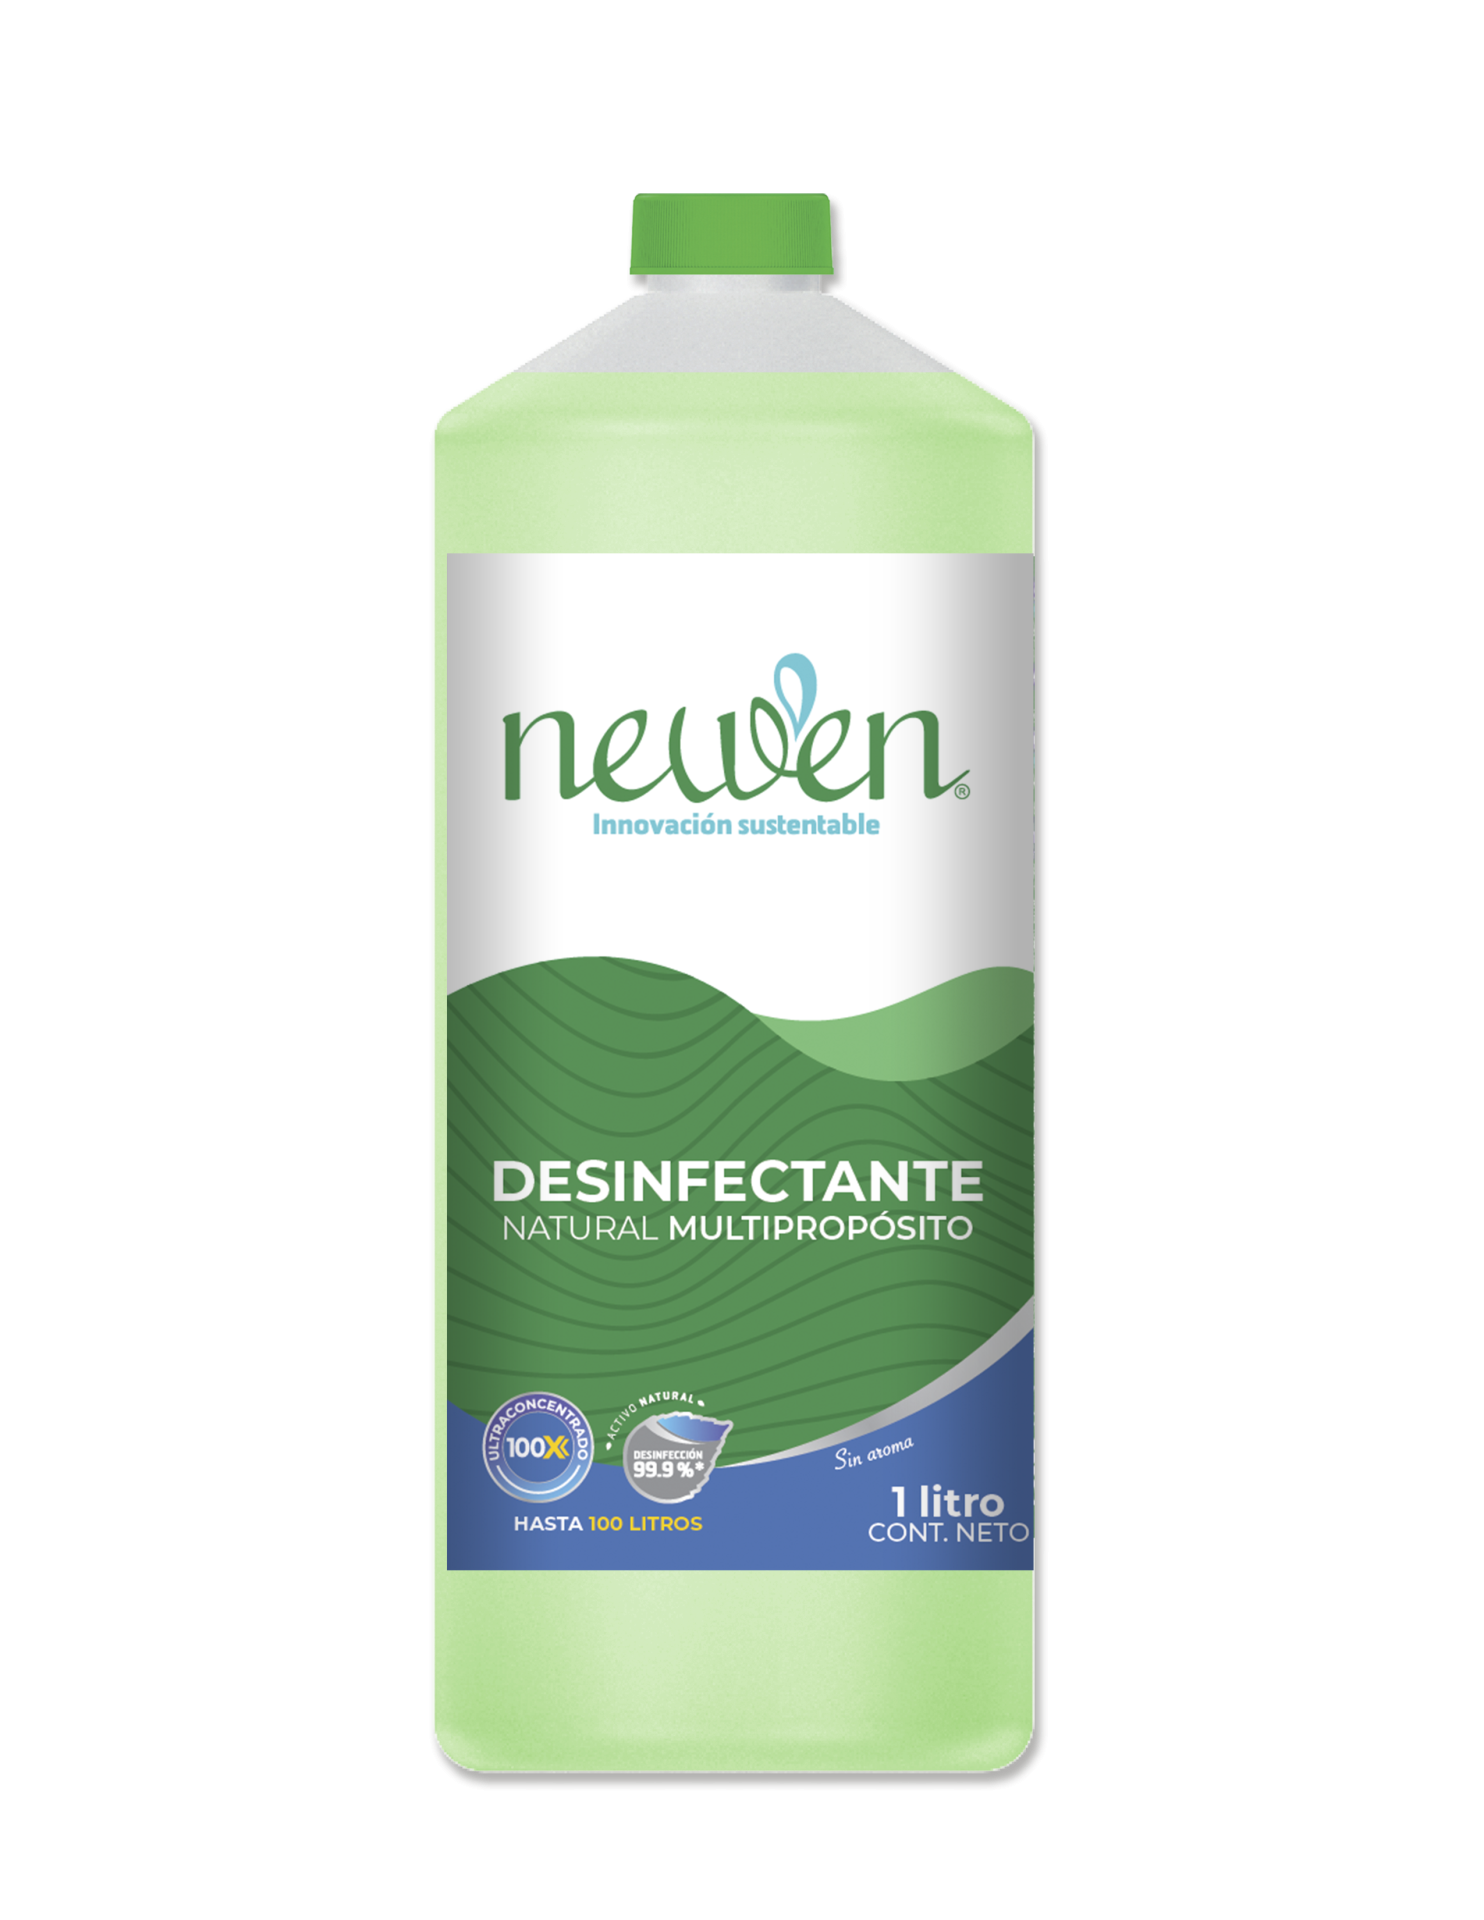 Tenn & Neutrex lanzan su nueva gama Higiene sin lejía